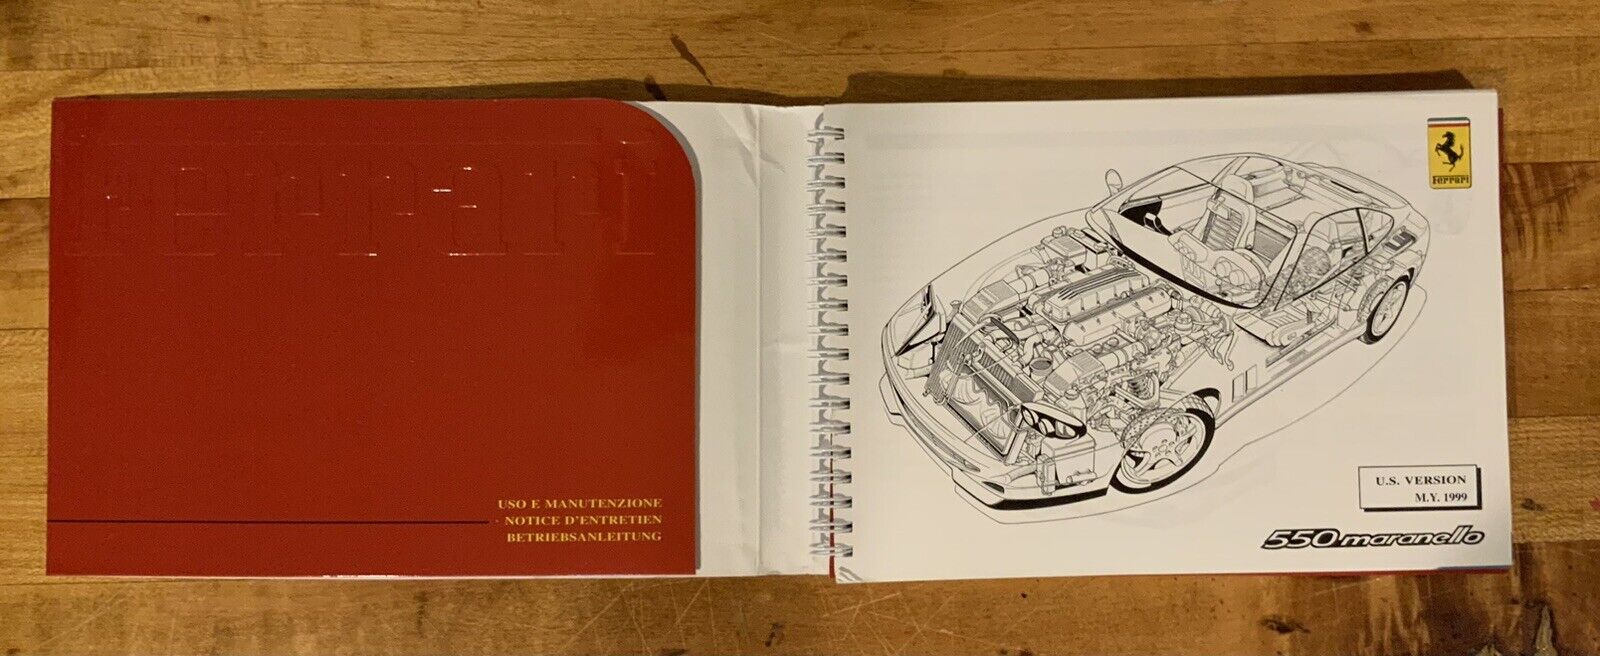 Ferrari 550 Maranello Owners Manual | (1392/98) | Factory Original | ‘99 MY-USA